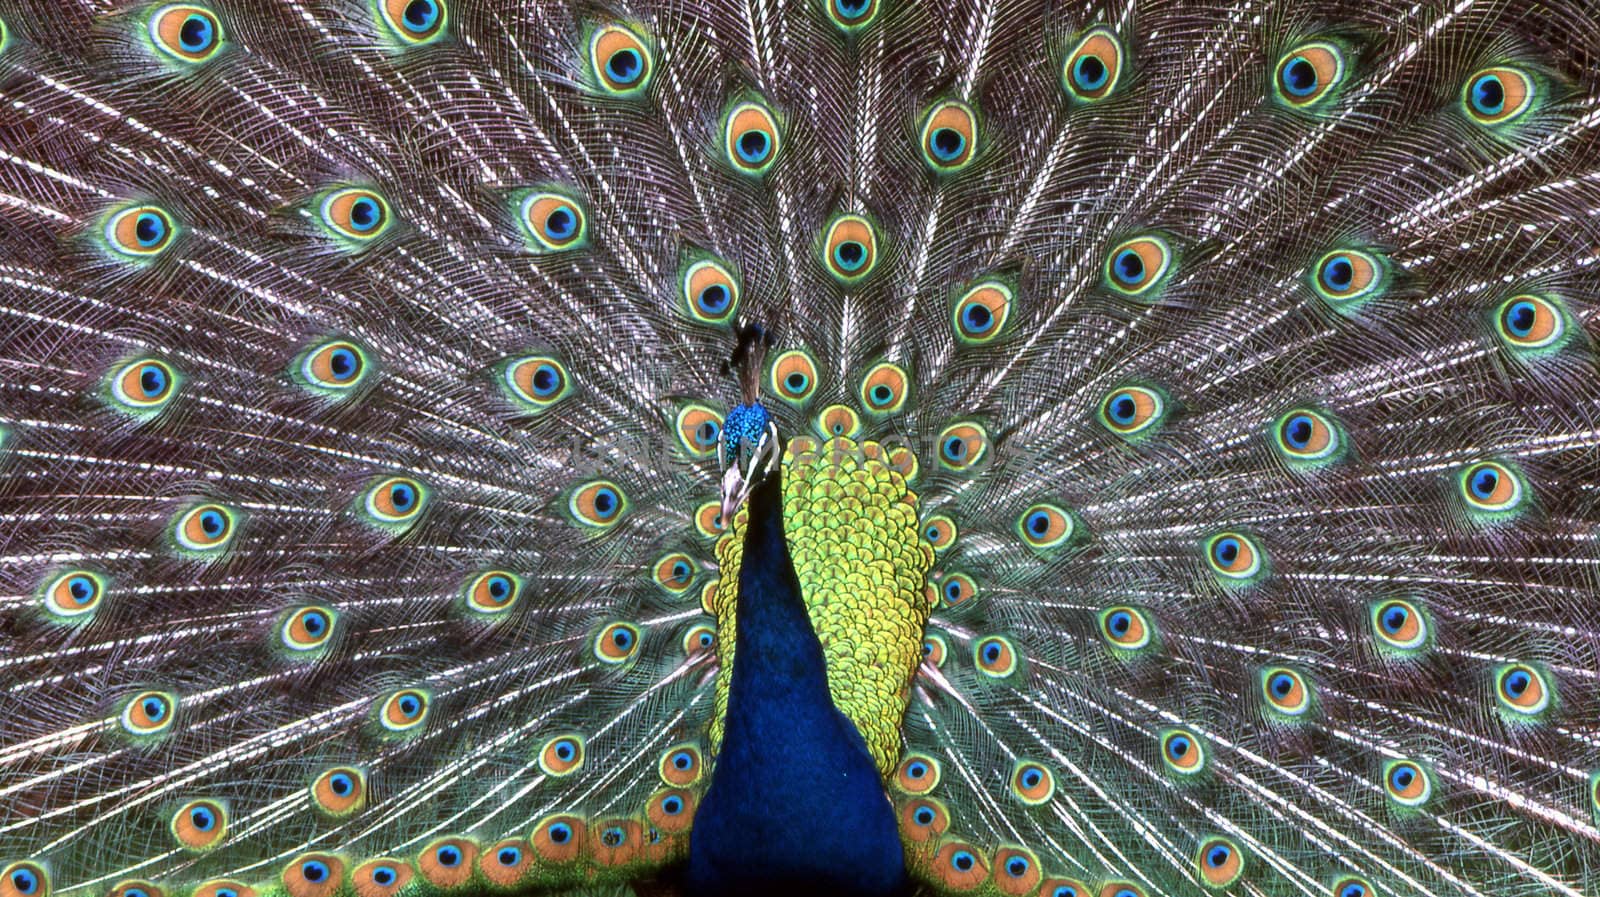 Peacock by jol66